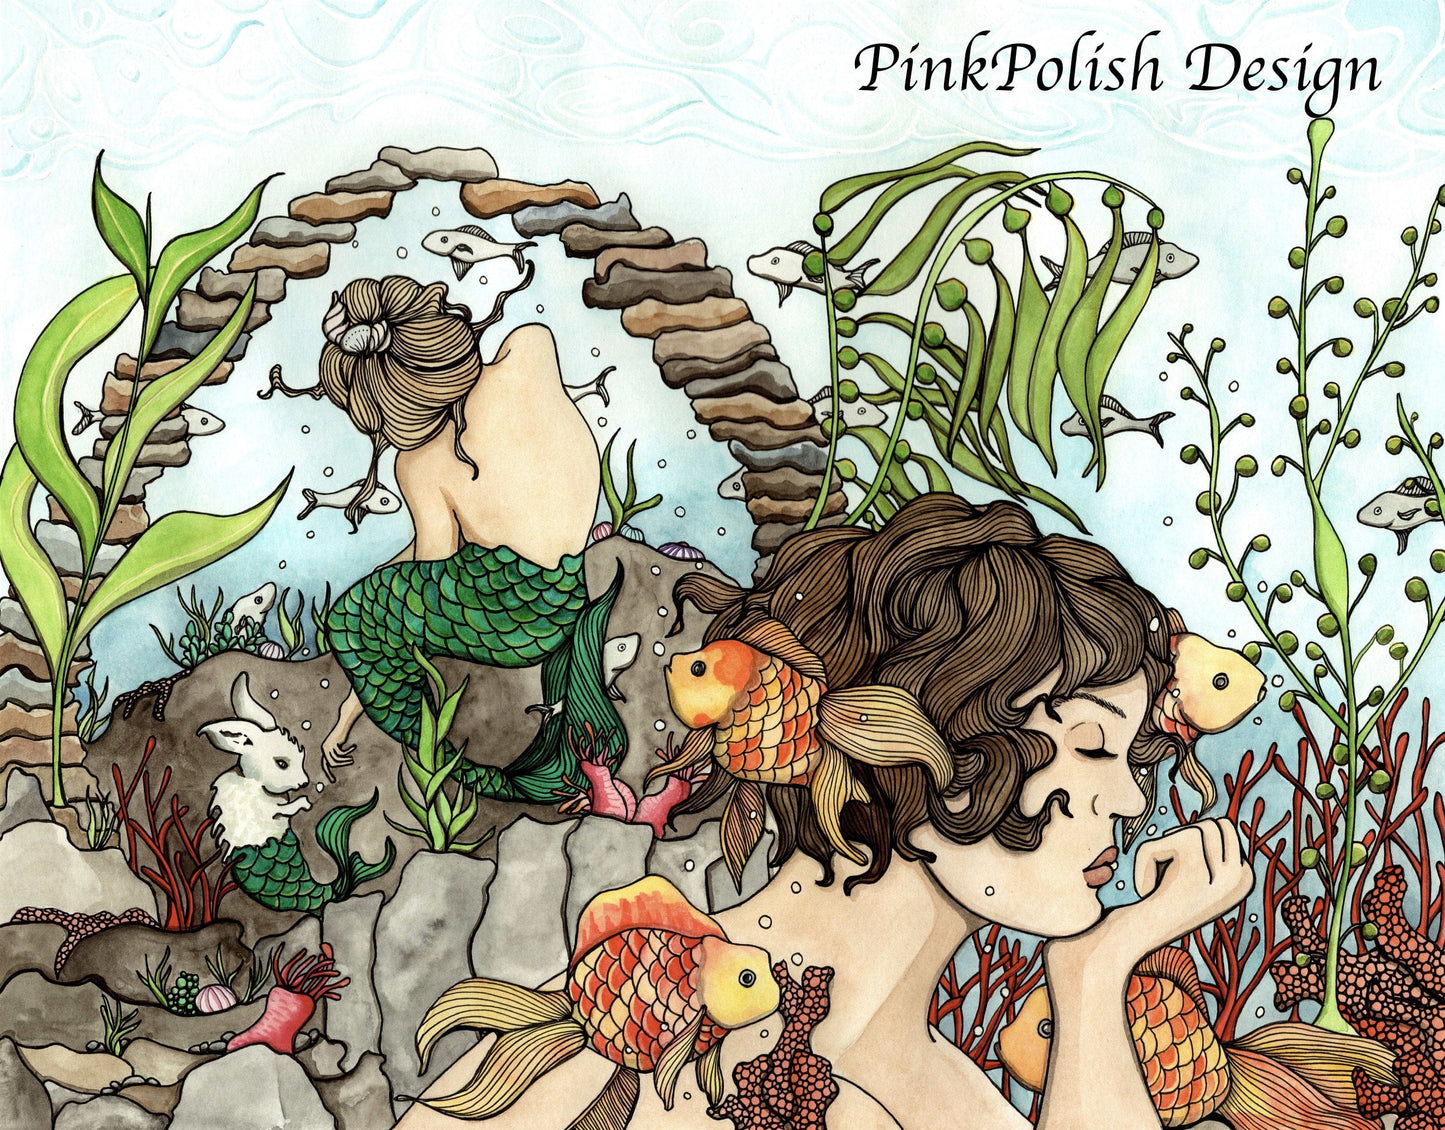 PinkPolish Design Art Prints "Mermaid Daydream" Watercolor Painting: Art Print